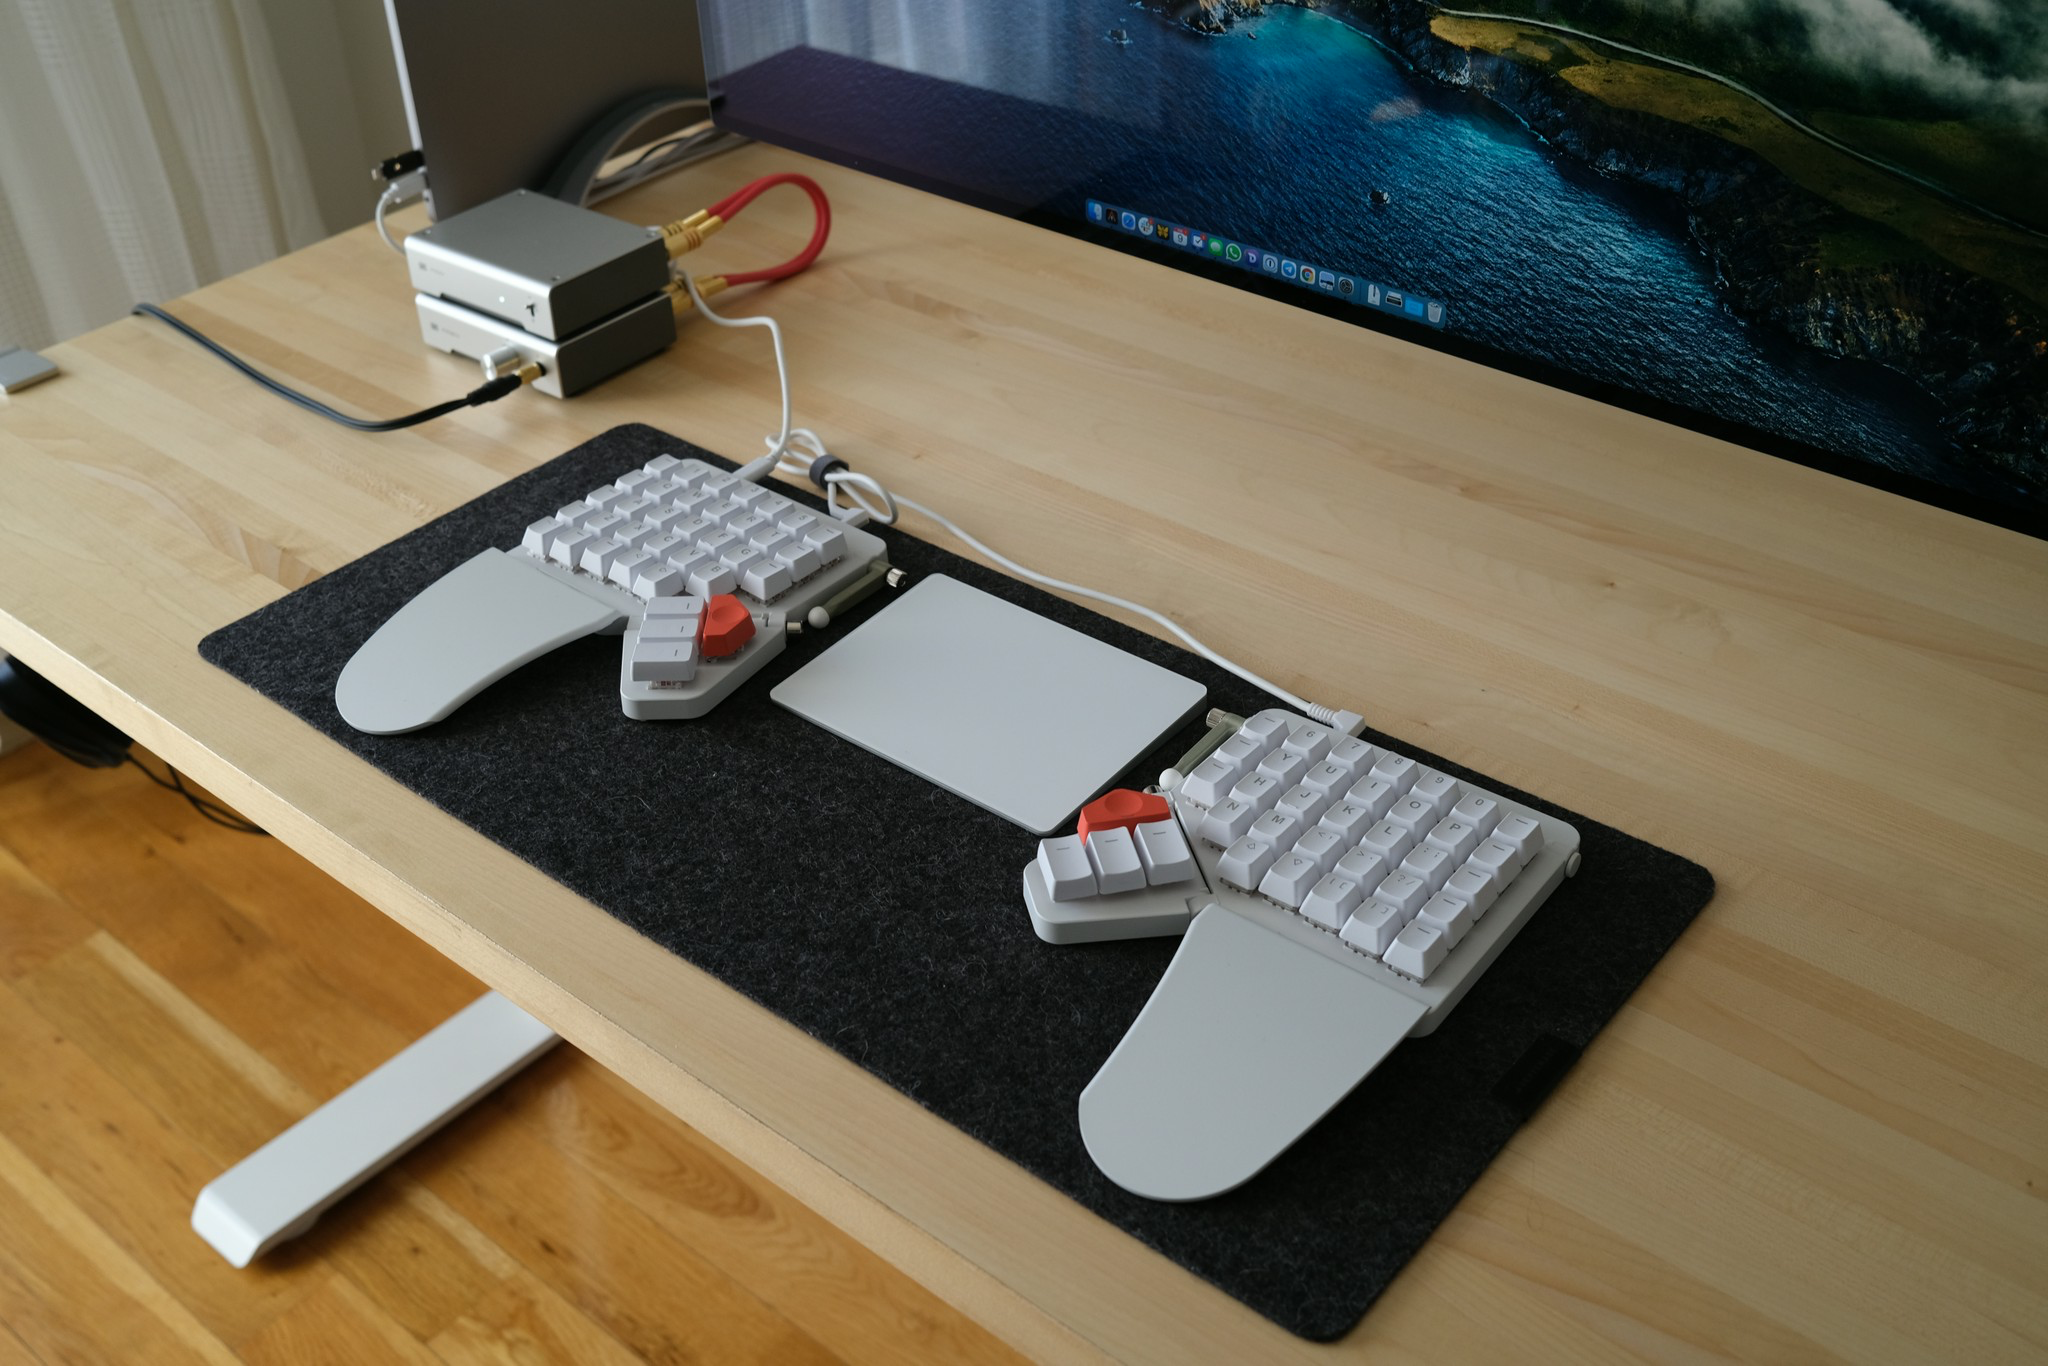 My review of the Moonlander MK1 keyboard